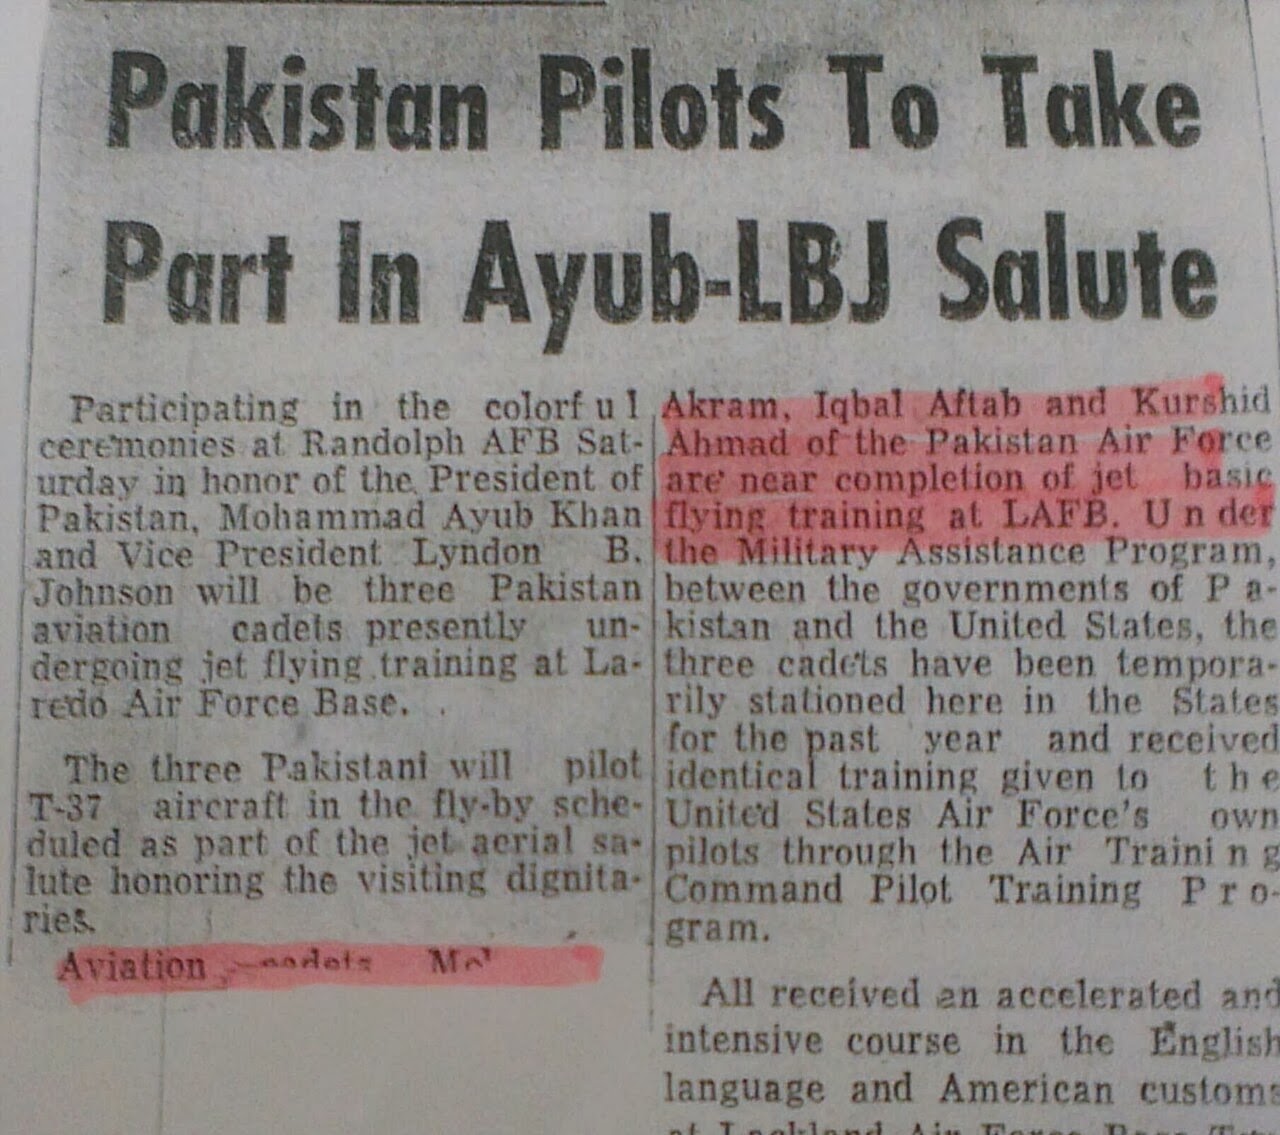 AVM Aftab took part in Ayub-LBJ Salute -1961